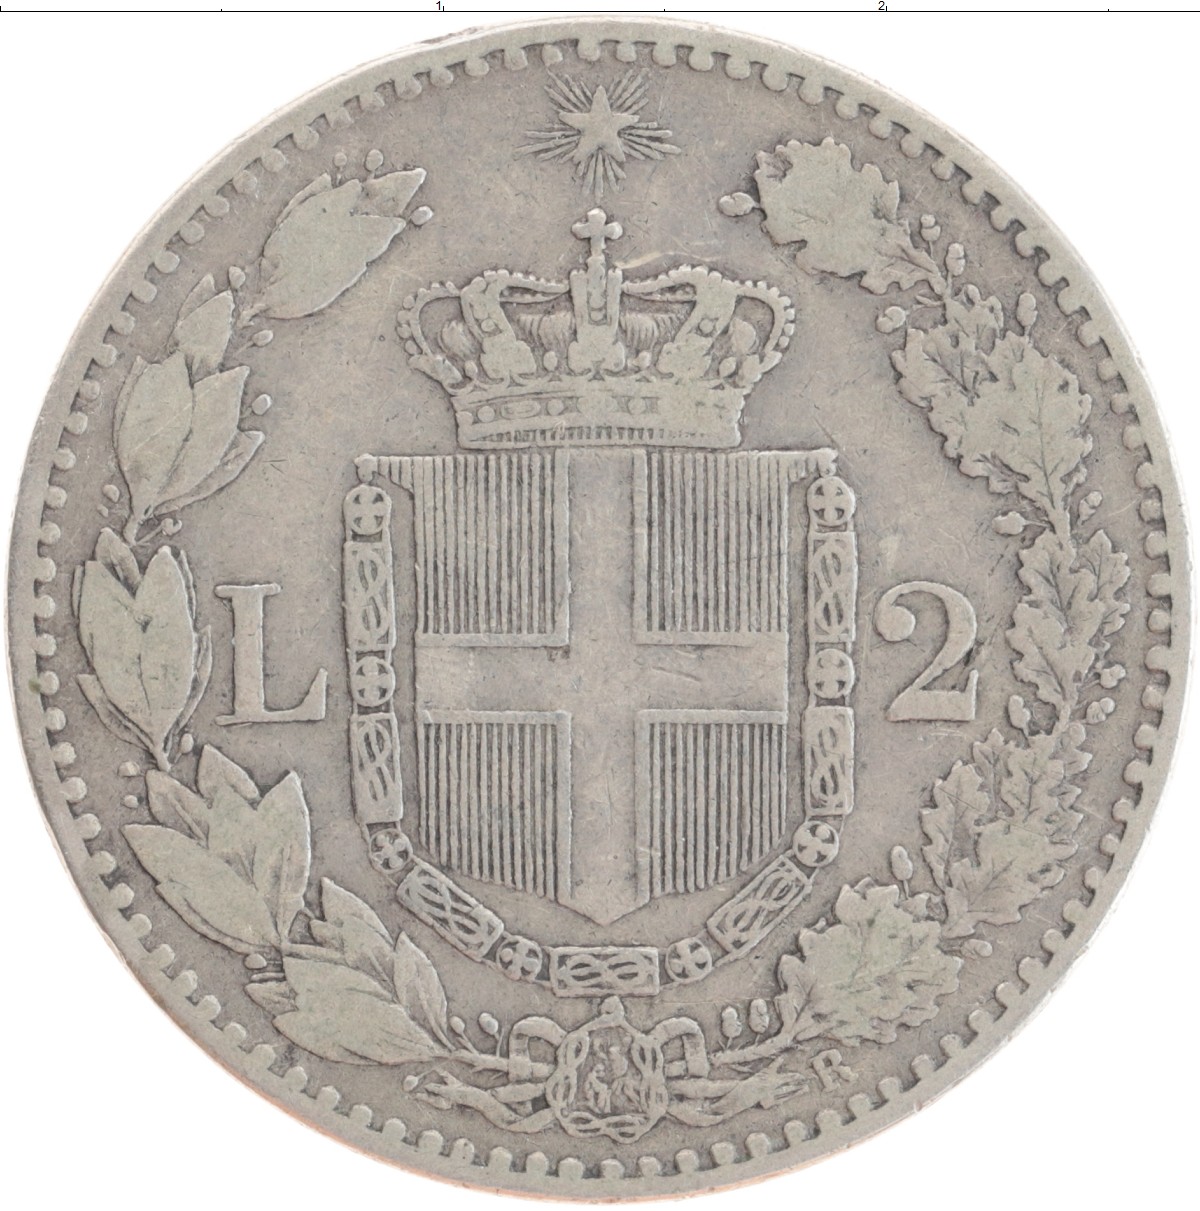 1879 лир. Италия 2 Лиры 1882 Умберто i серебро XF. Умберто 1 монета. Итальянские монеты 2 Лиры. Италия 2 Лиры, 1897.